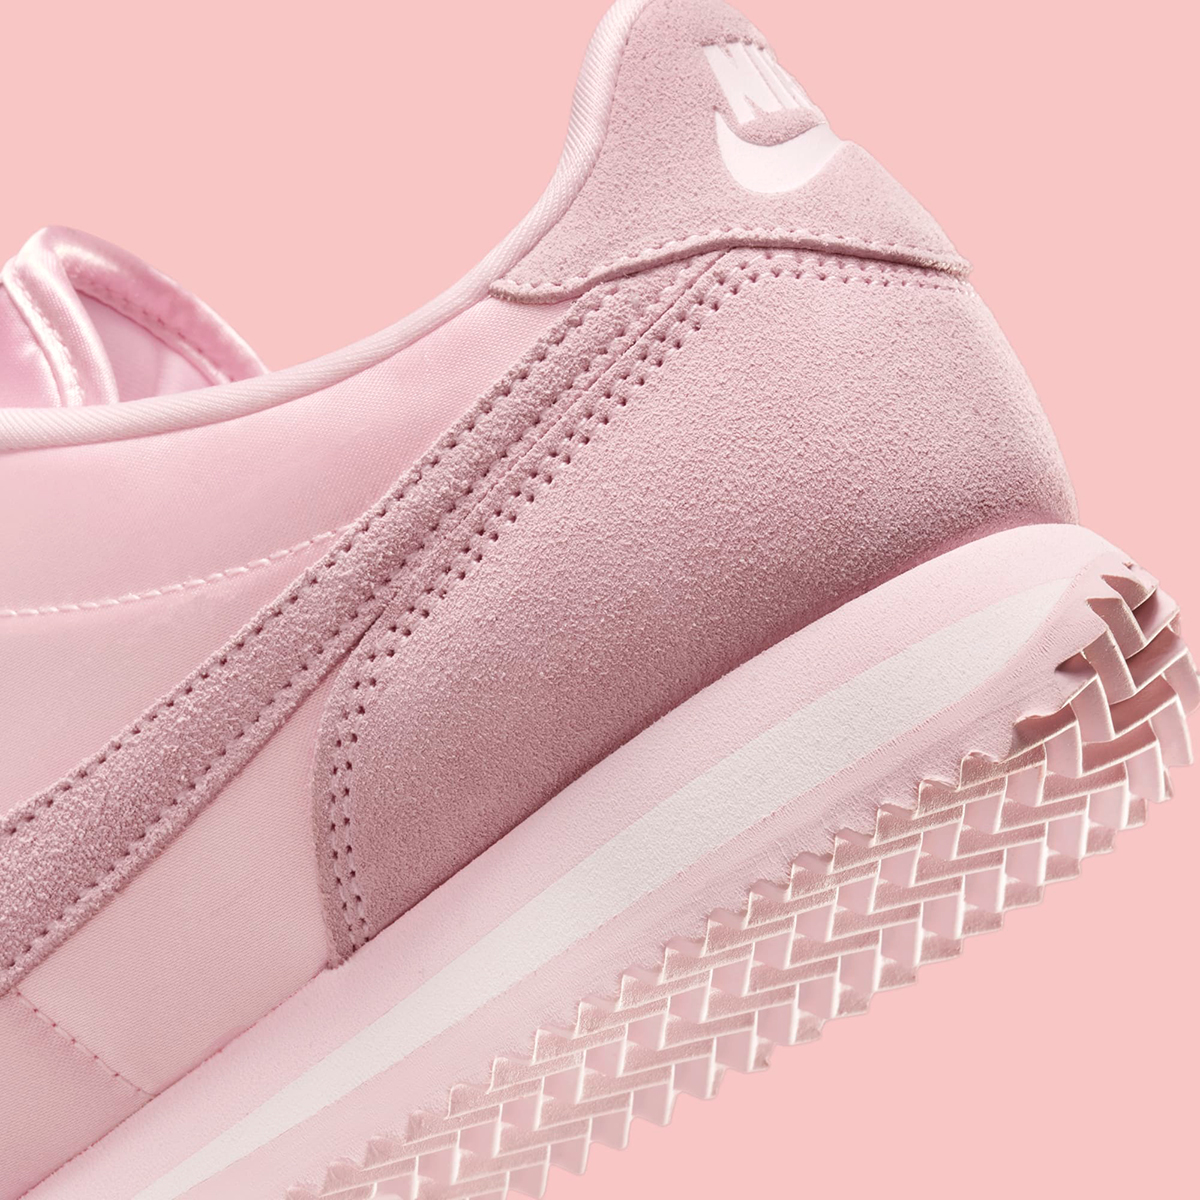 Nike Cortez Womens Satin Pink Fv5420 600 4